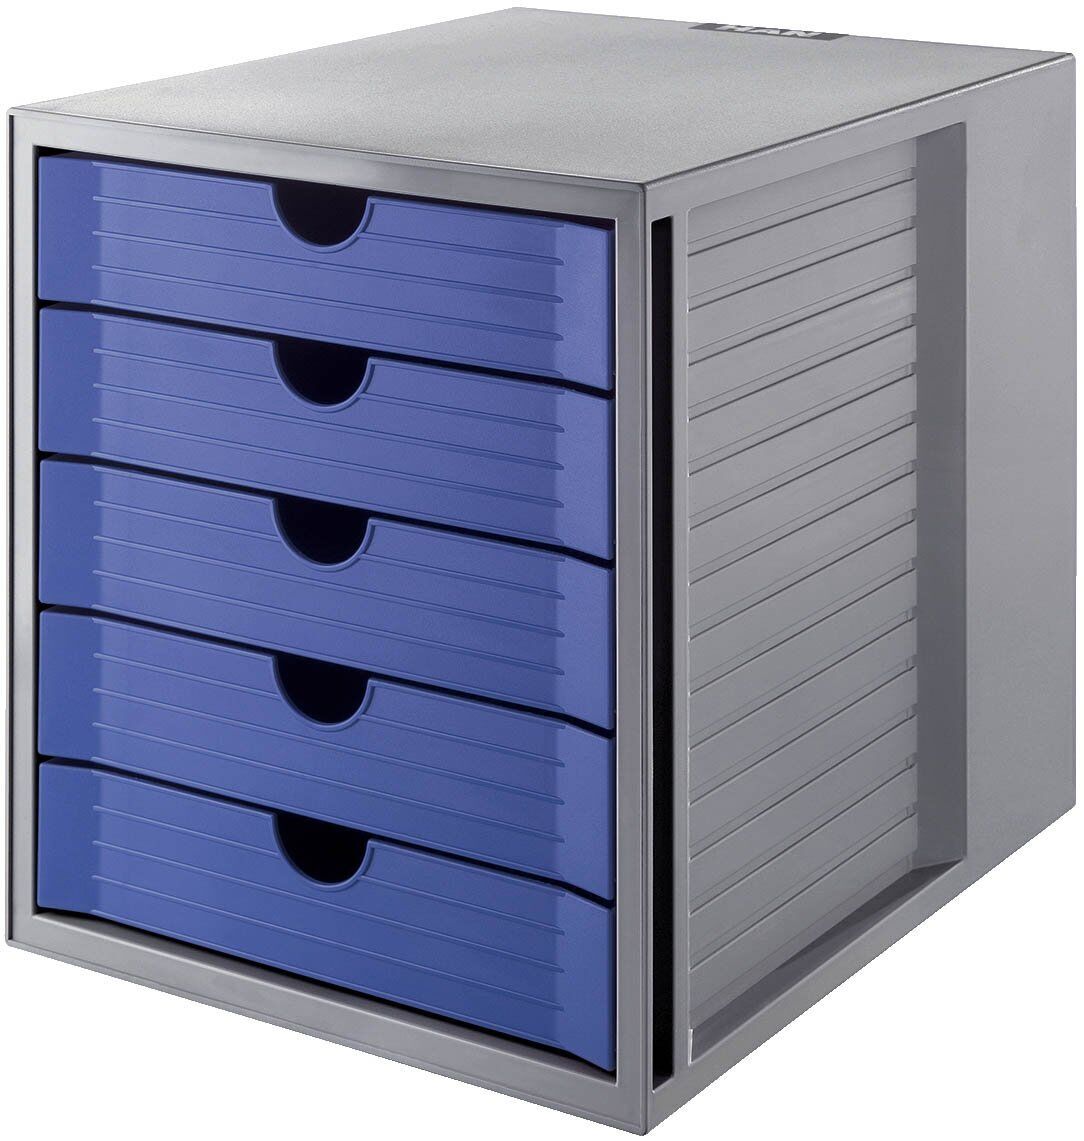 Schubladenbox SYSTEMBOX KARMA - A4/C4, 5 geschlossene Schubladen, grau-öko-blau